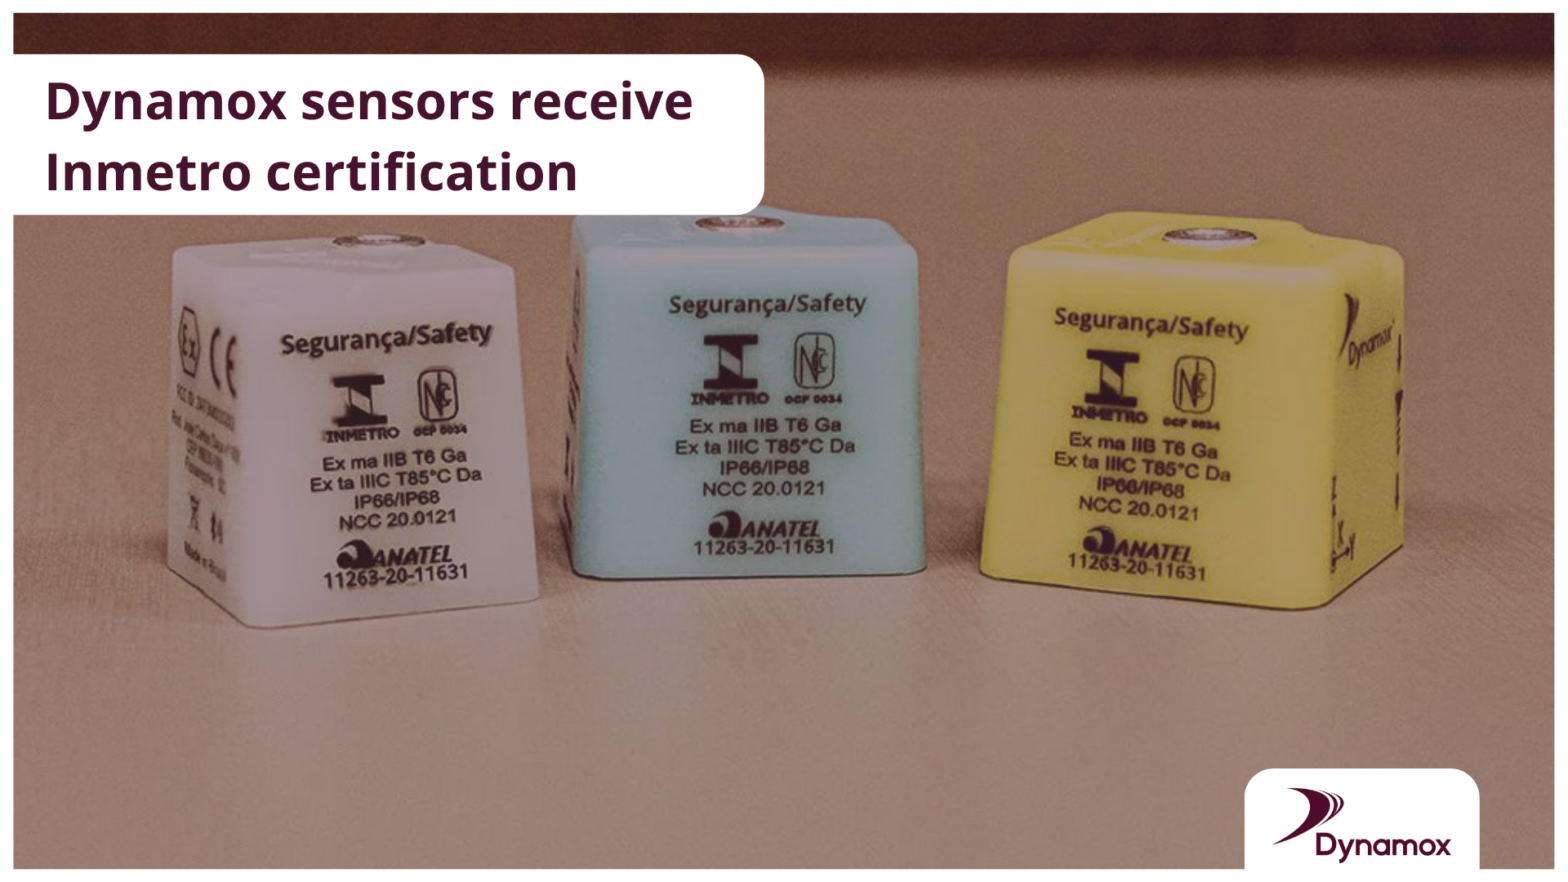 Dynamox sensors receive Inmetro certification